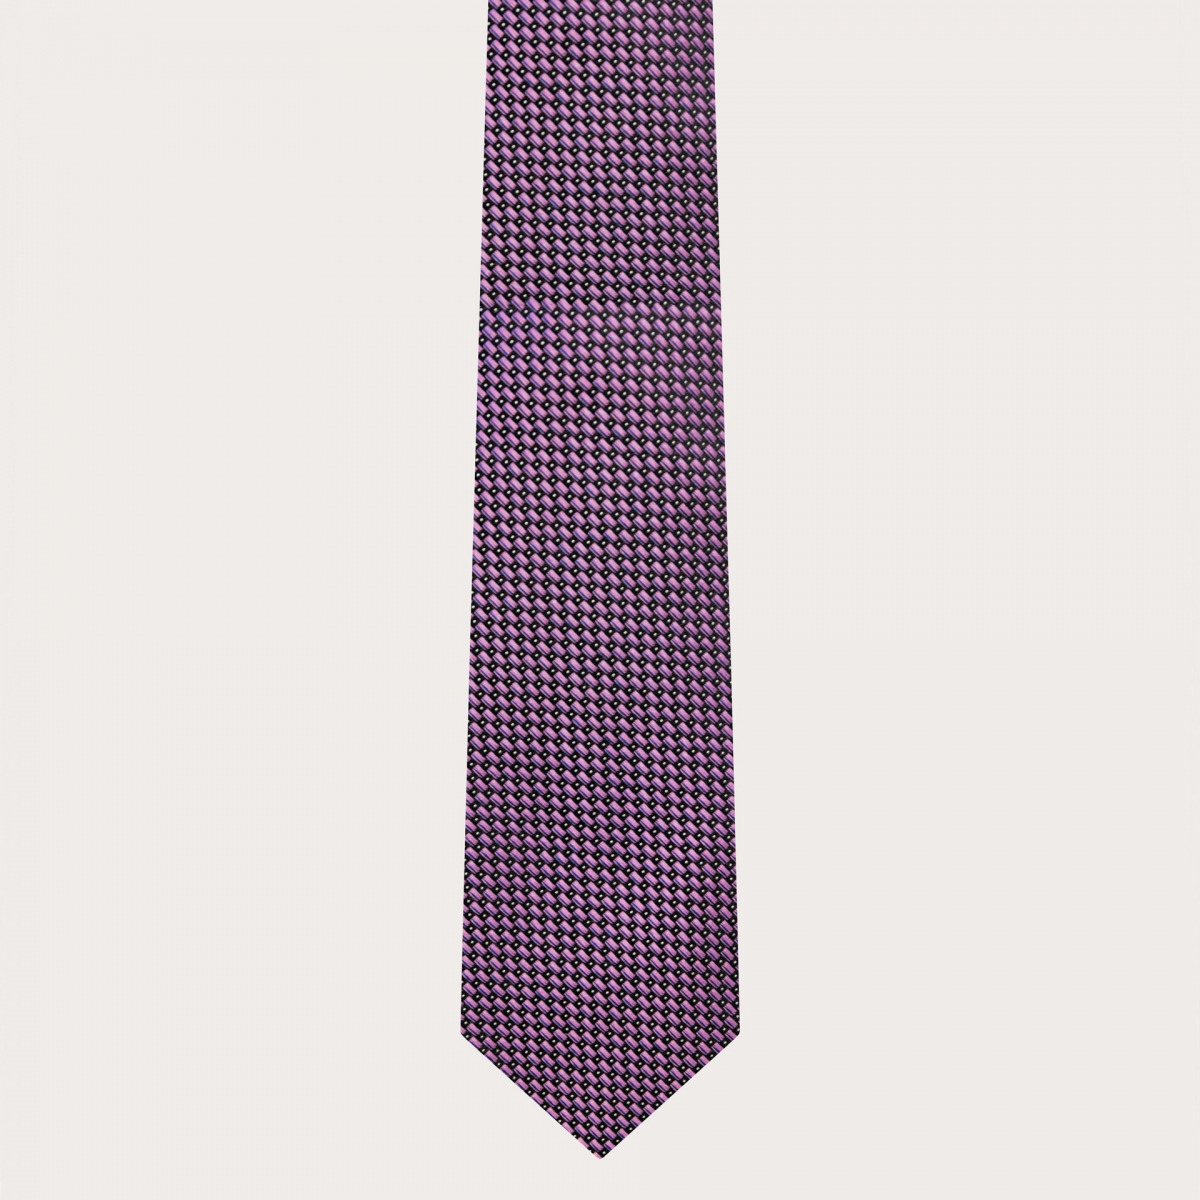 BRUCLE Elegante set di bretelle elastiche blu, cravatta e fazzoletto da taschino in seta rosa e blu